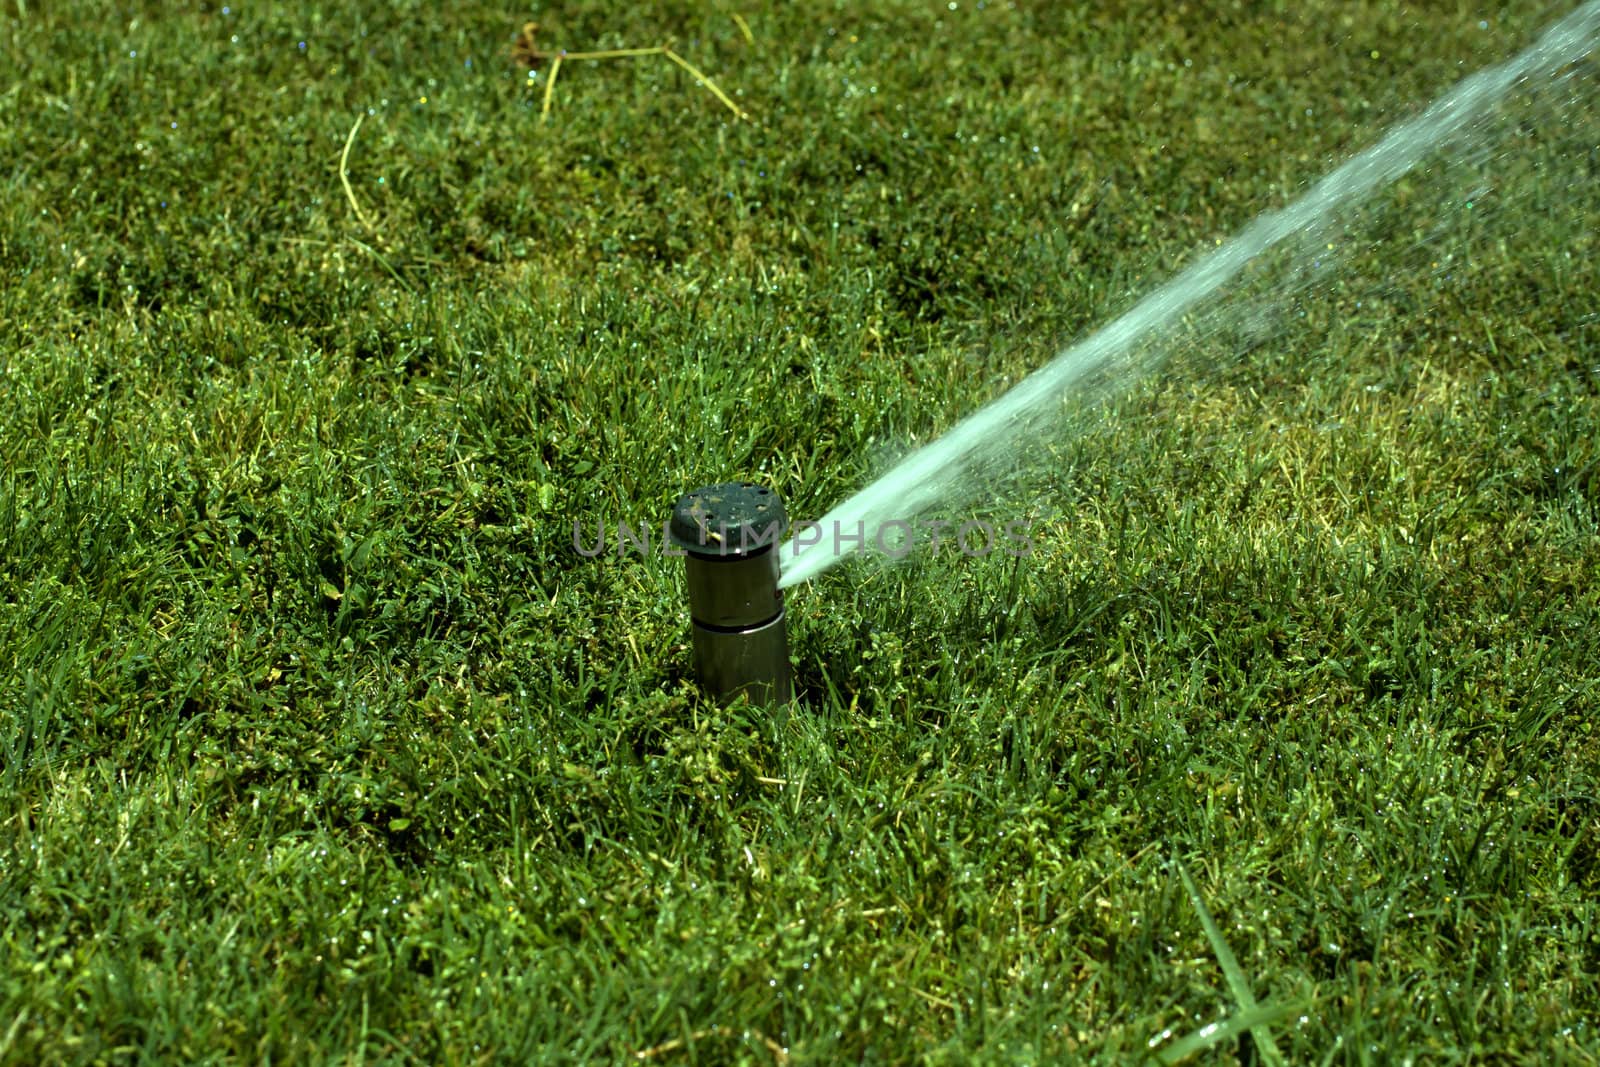 Sprinkler spraying water on a green lawn